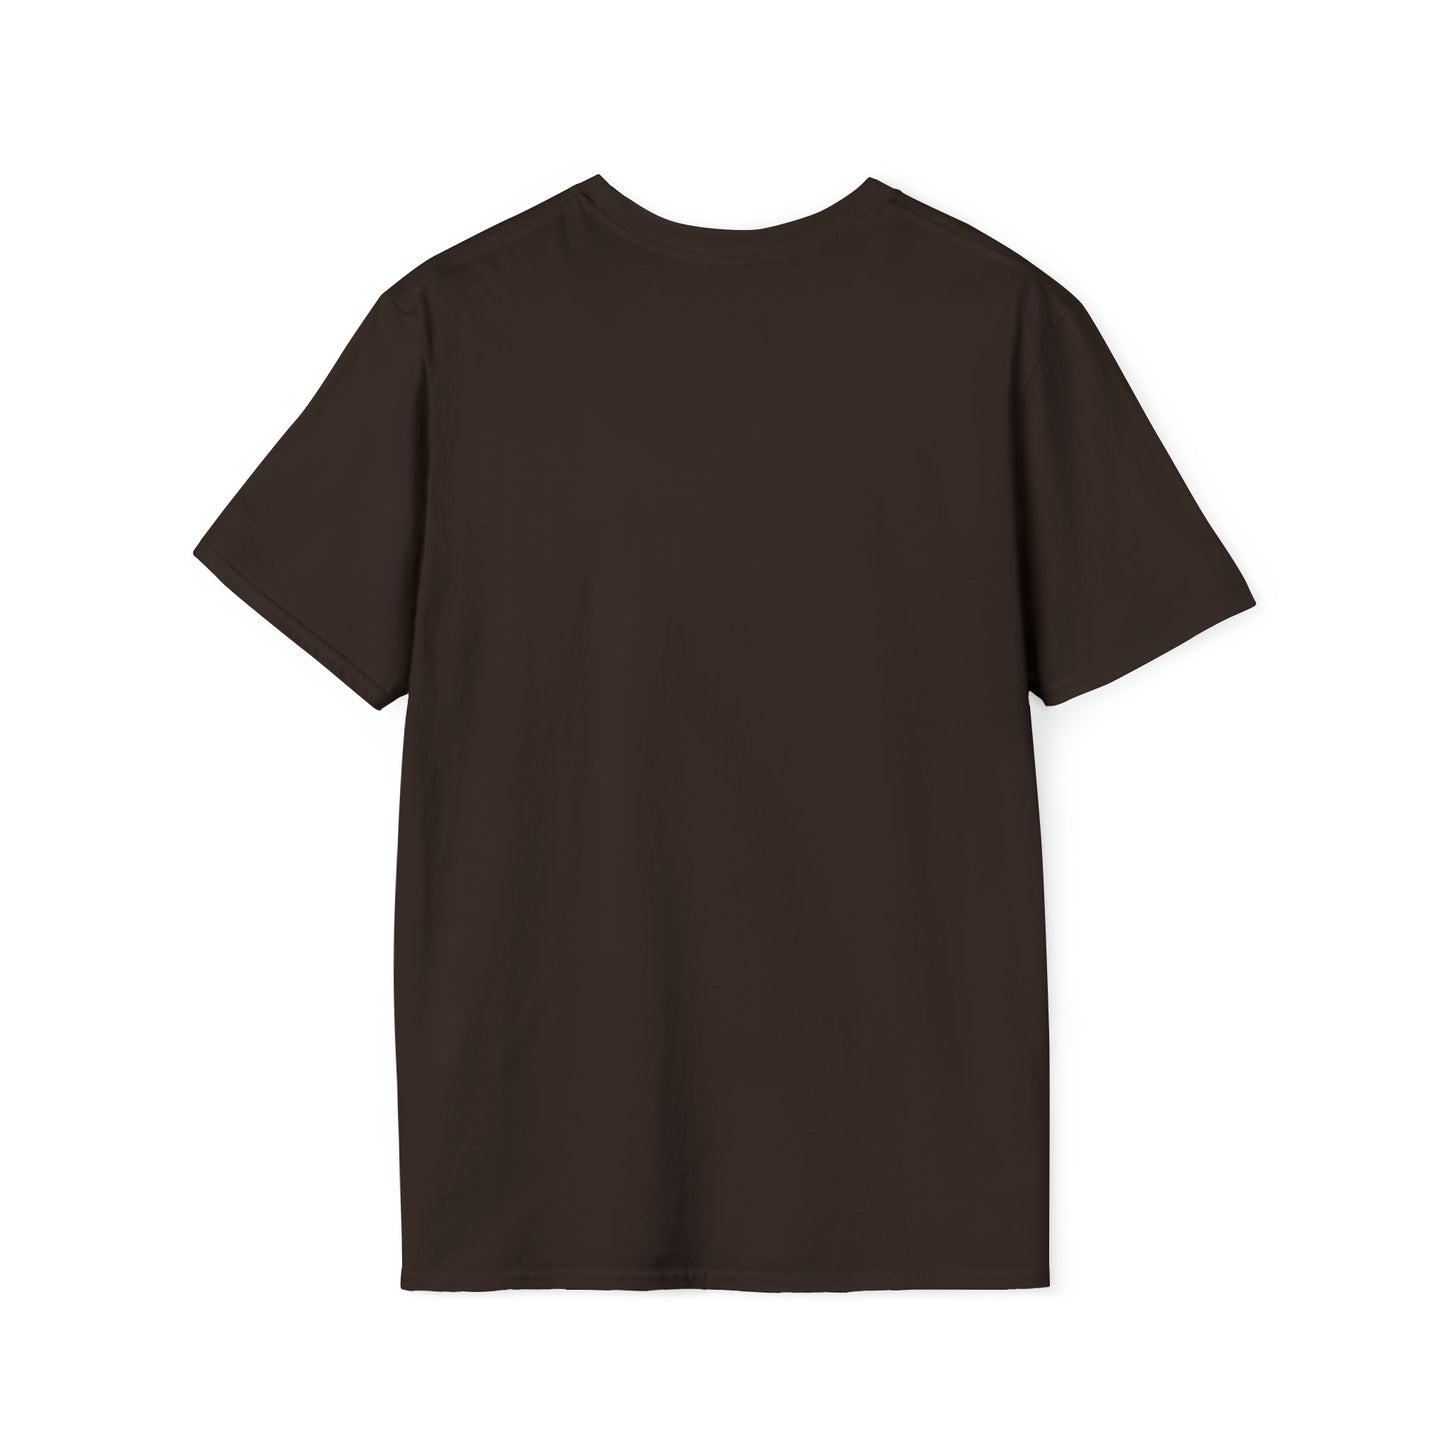 Kiddicraft - Wer hats erfunden? Unisex Softstyle T-Shirt